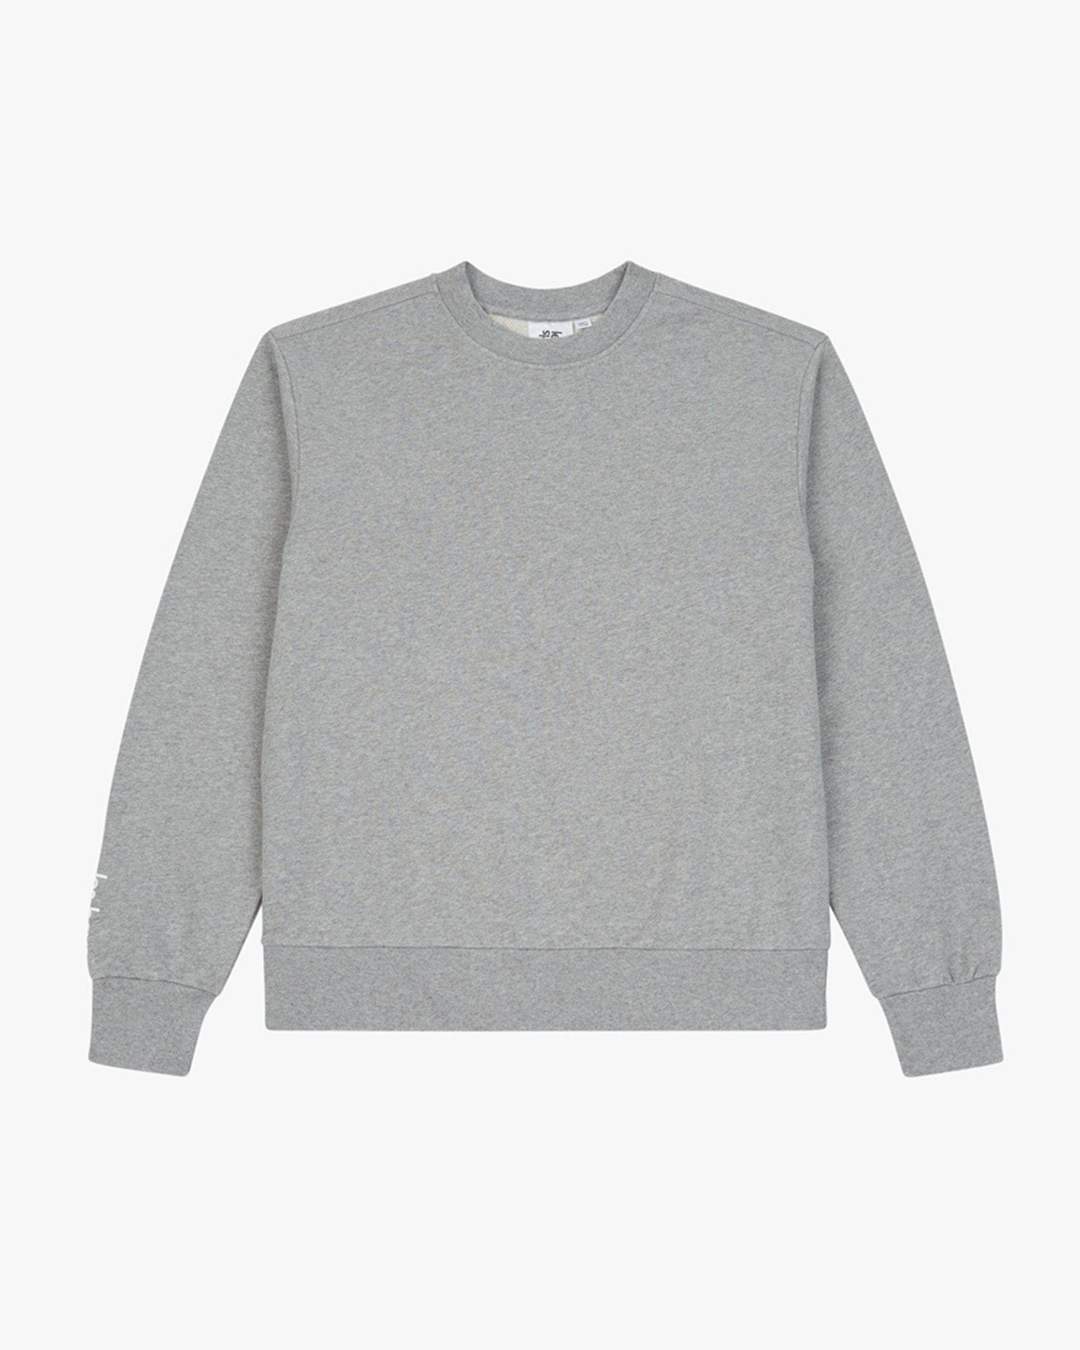 Les Girls Les Boys + Crew Neck Sweatshirt Grey Marl